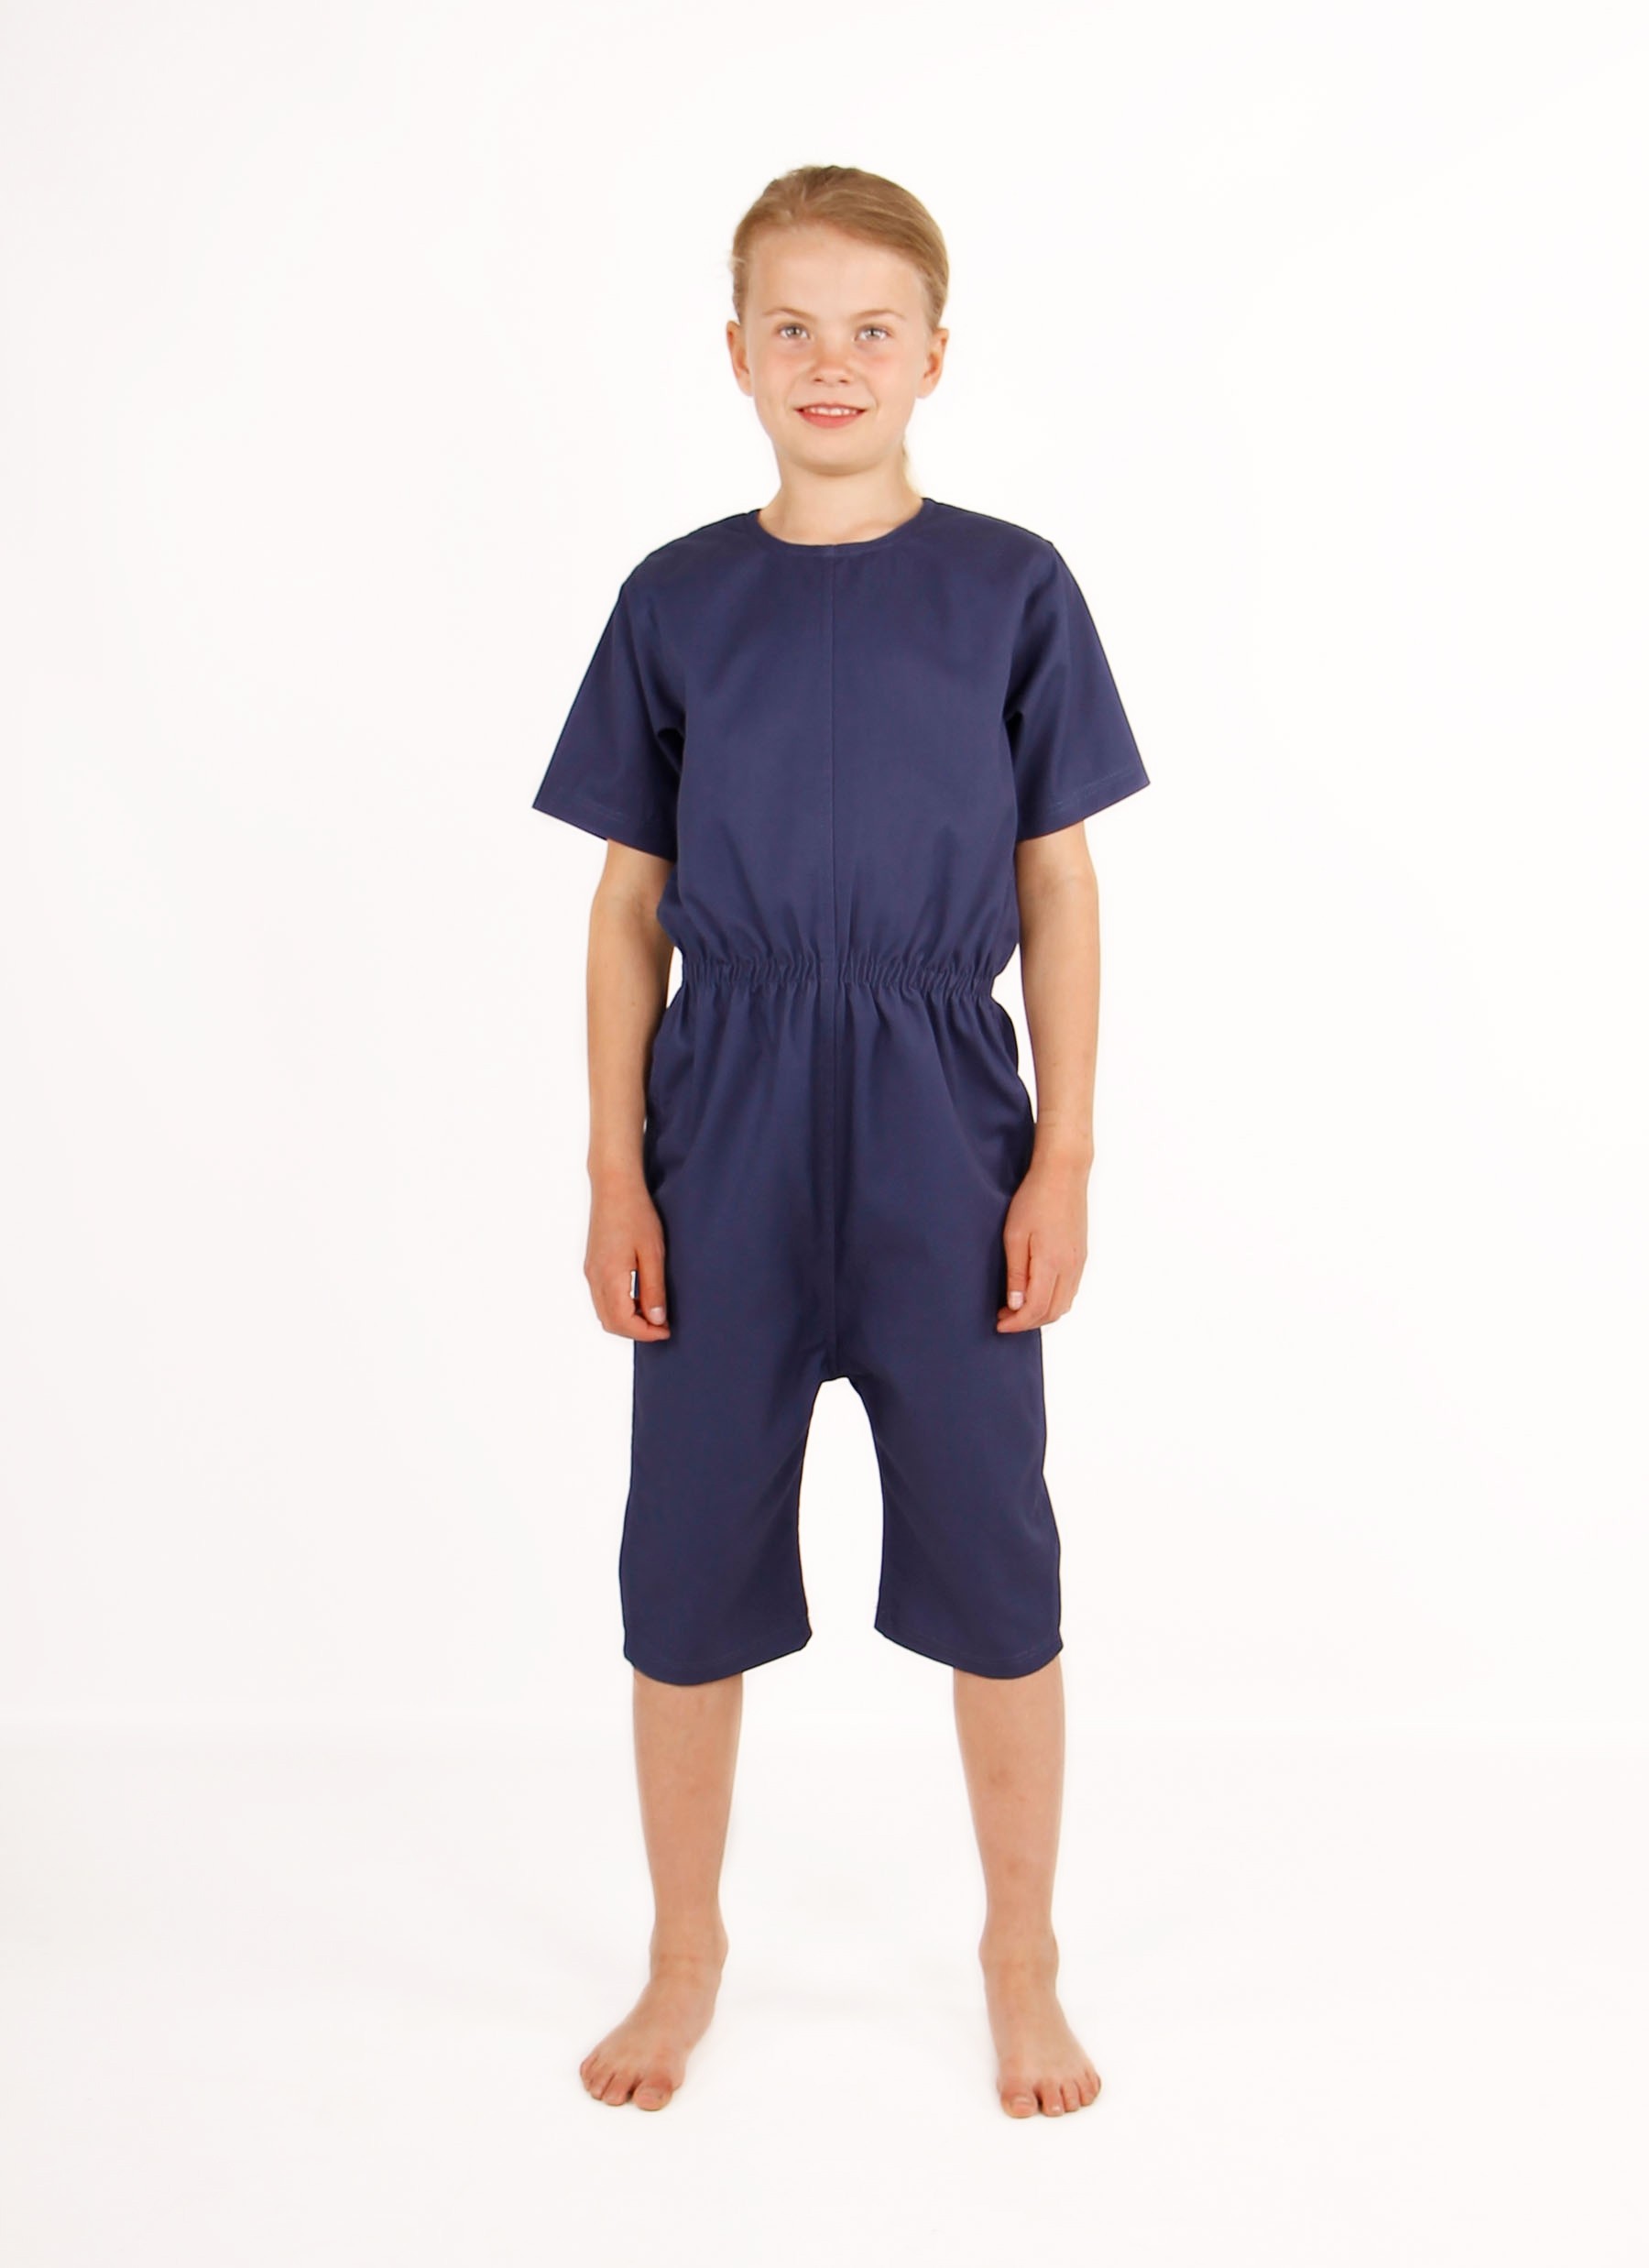 Navy Short Sleeve Bodysuit, Wonsie, Wonsie, Clothing for Special Needs